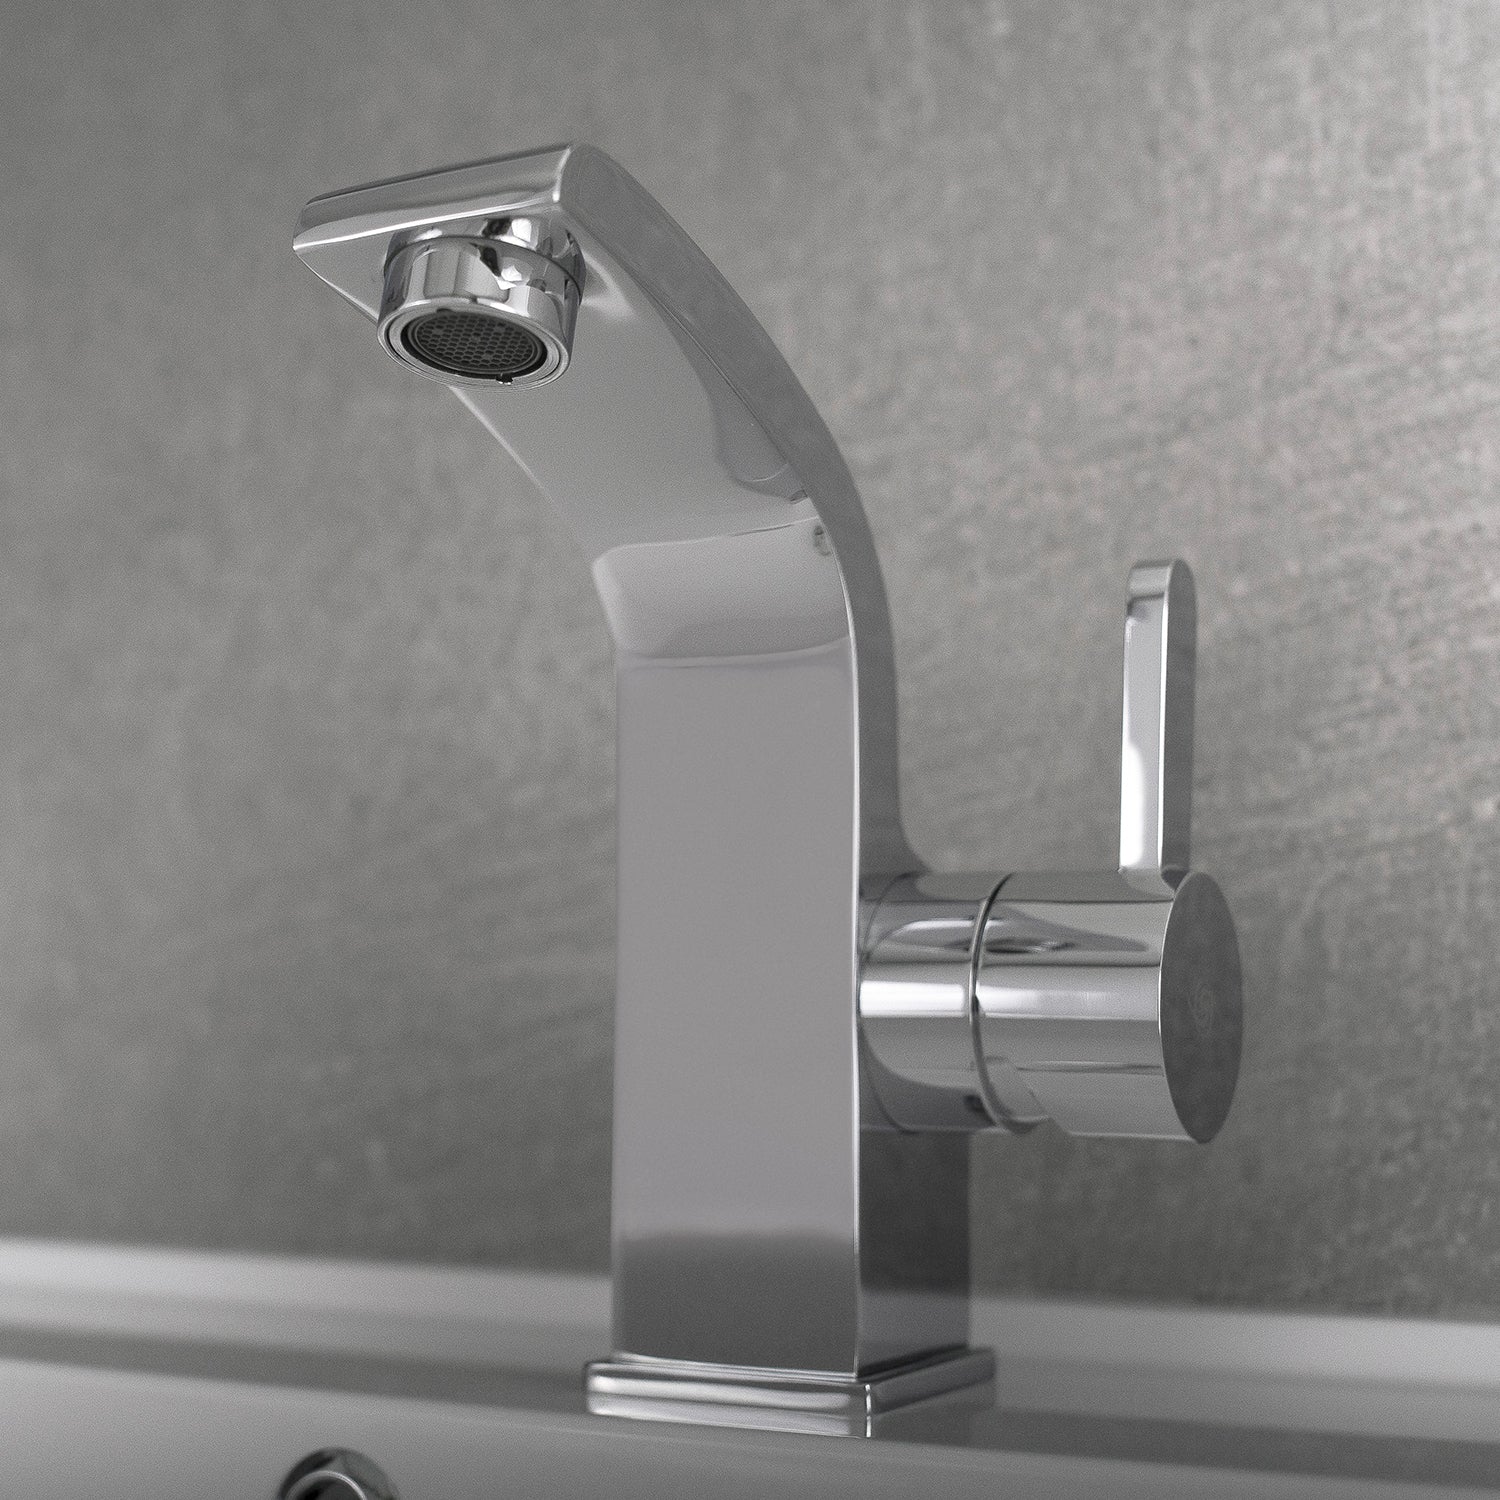 DAX Single Handle Bathroom Faucet, Brass Body, Chrome Finish, 3-15/16 x 5-15/16 Inches (DAX-8260-CR)